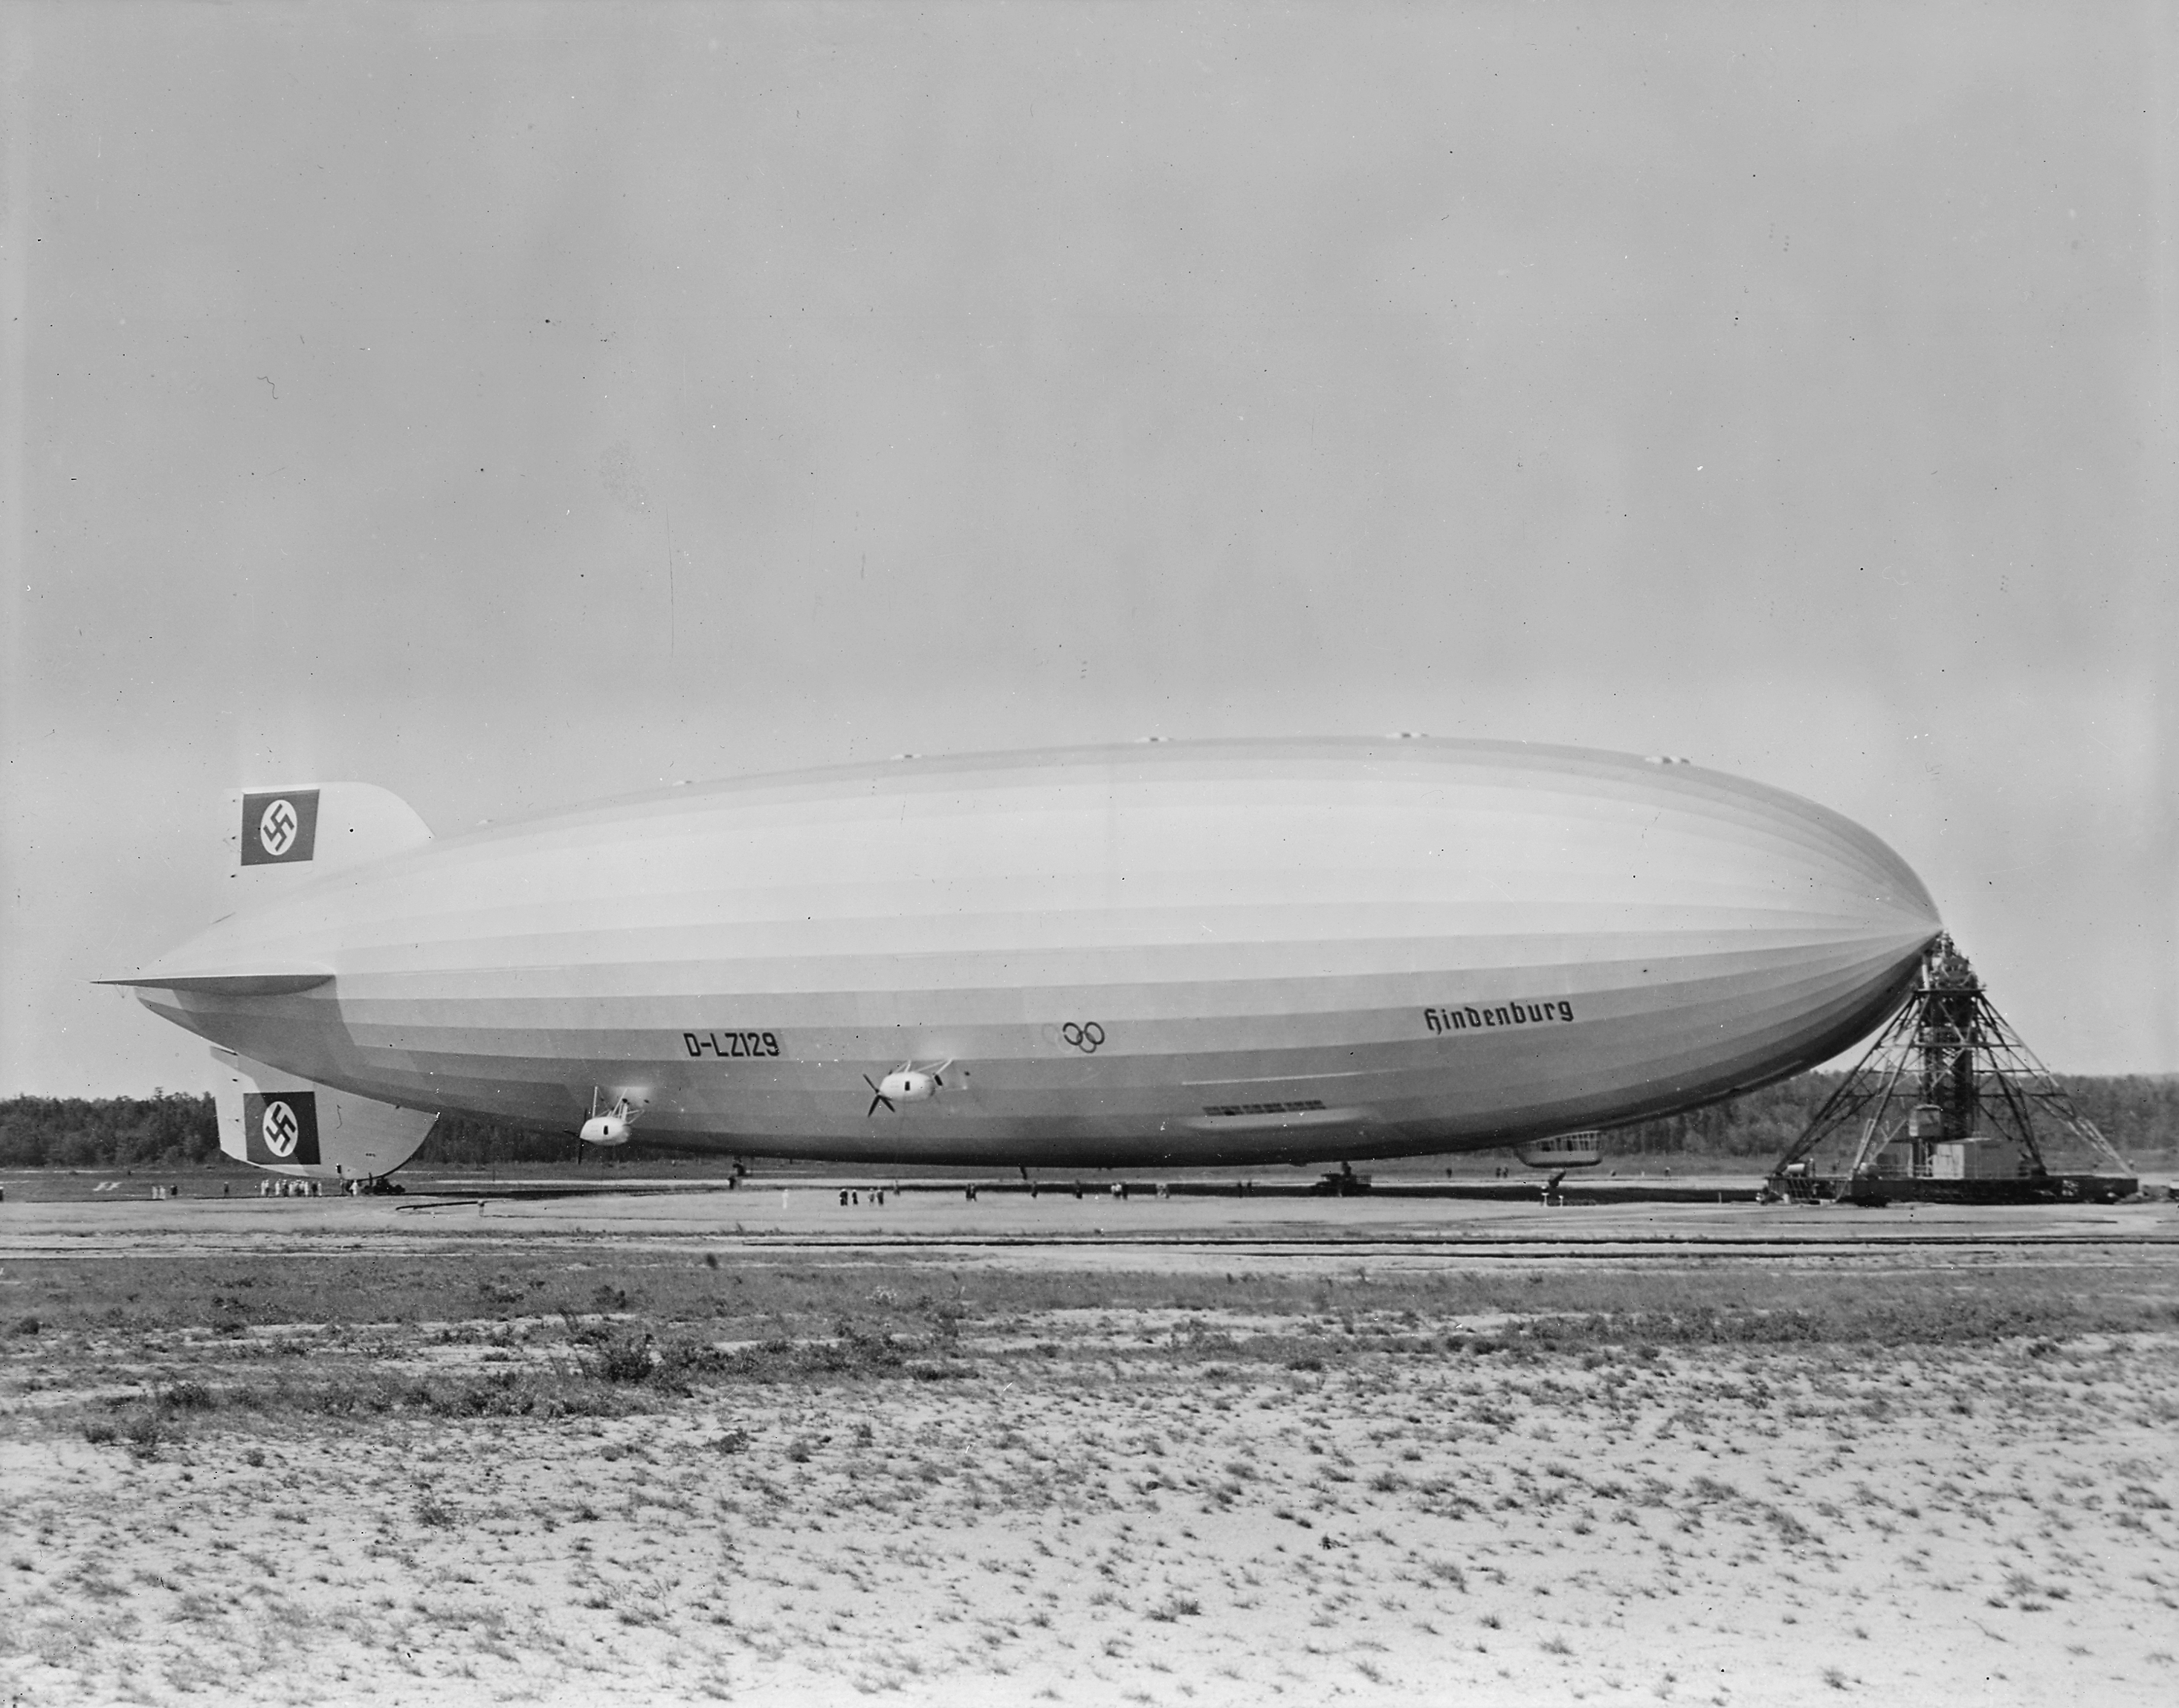 Ficheiro:Hindenburg at lakehurst.jpg